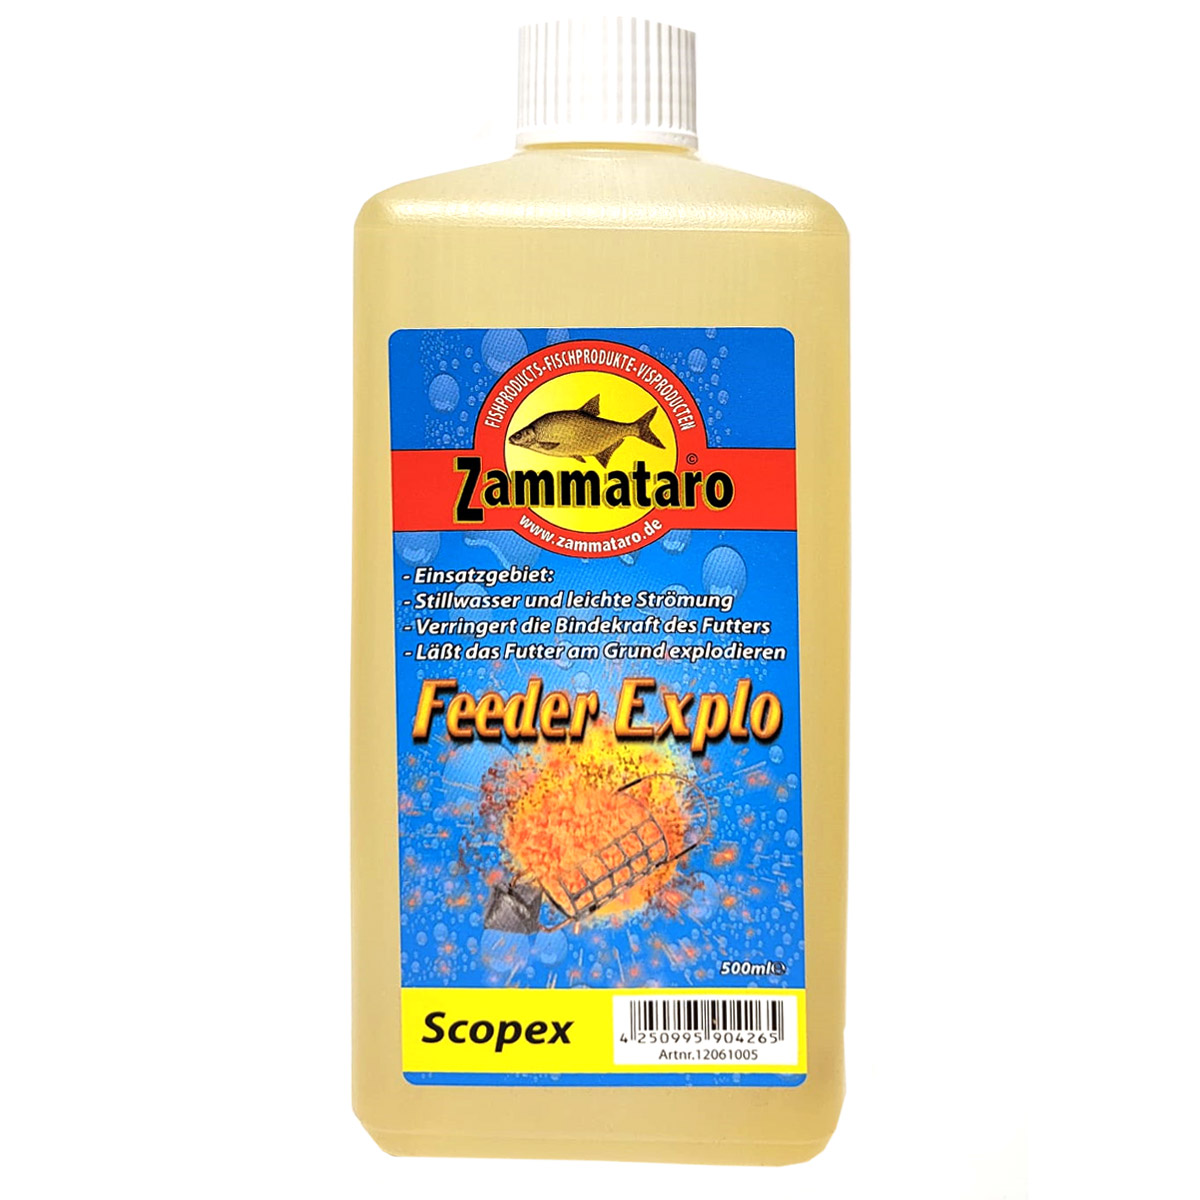 Zammataro Feeder Explo Scopex 500ml 